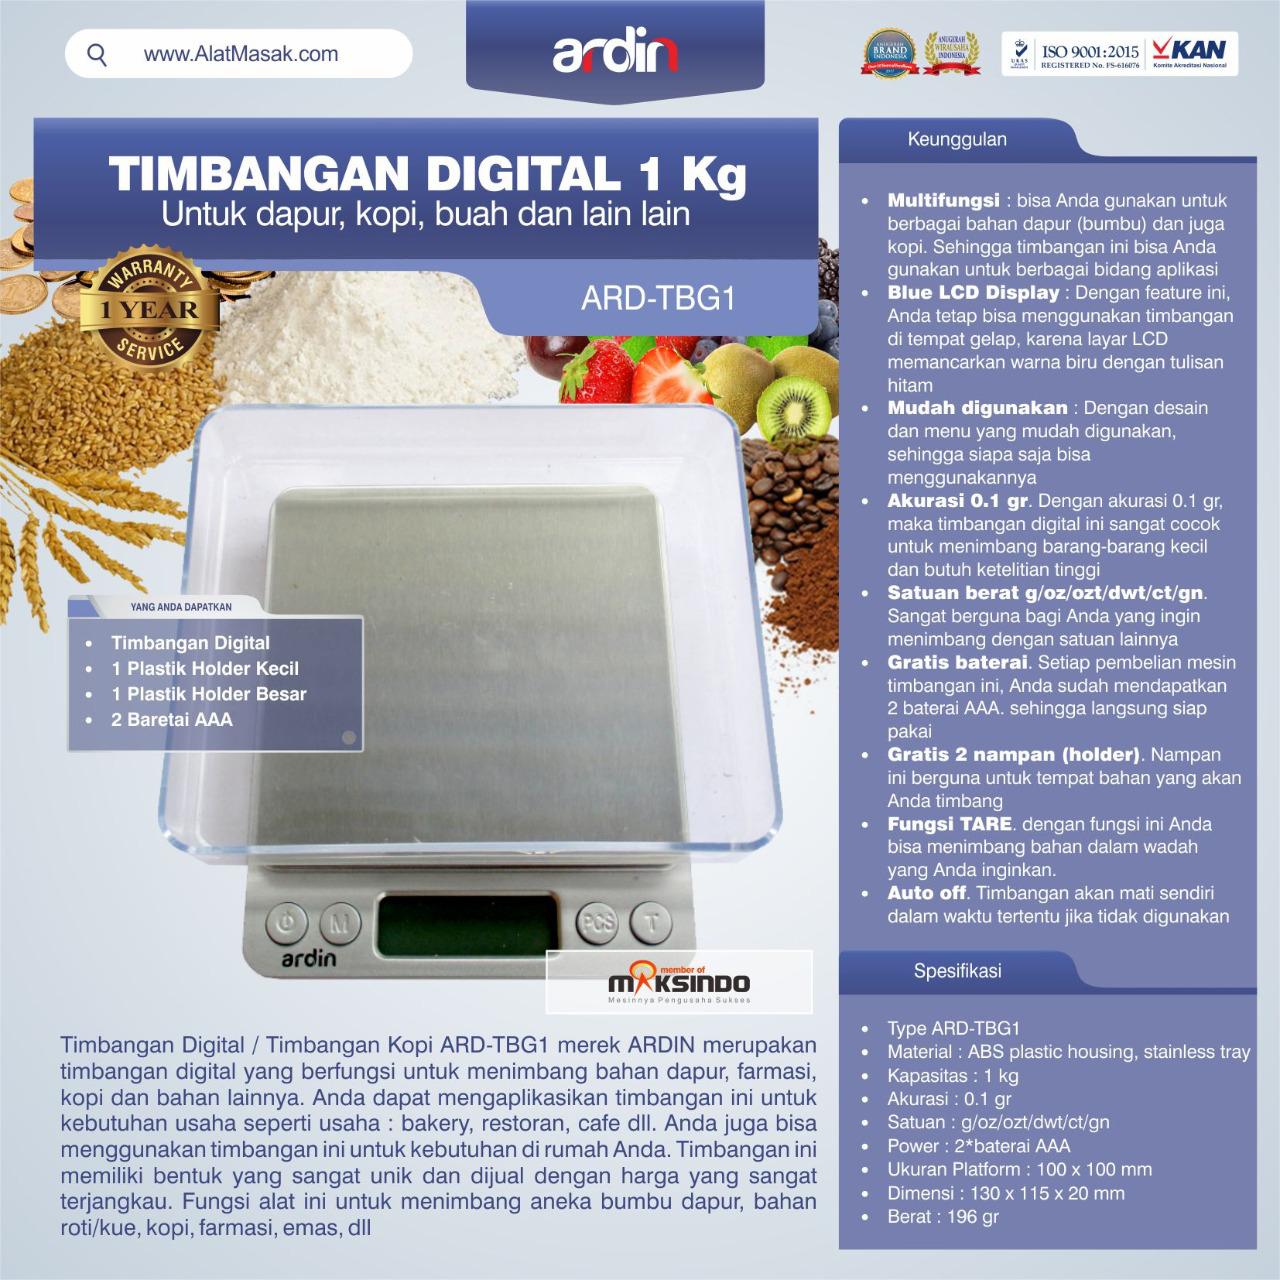 Jual Timbangan Digital Dapur 1 kg / Timbangan Kopi ARD-TBG1 di Jakarta